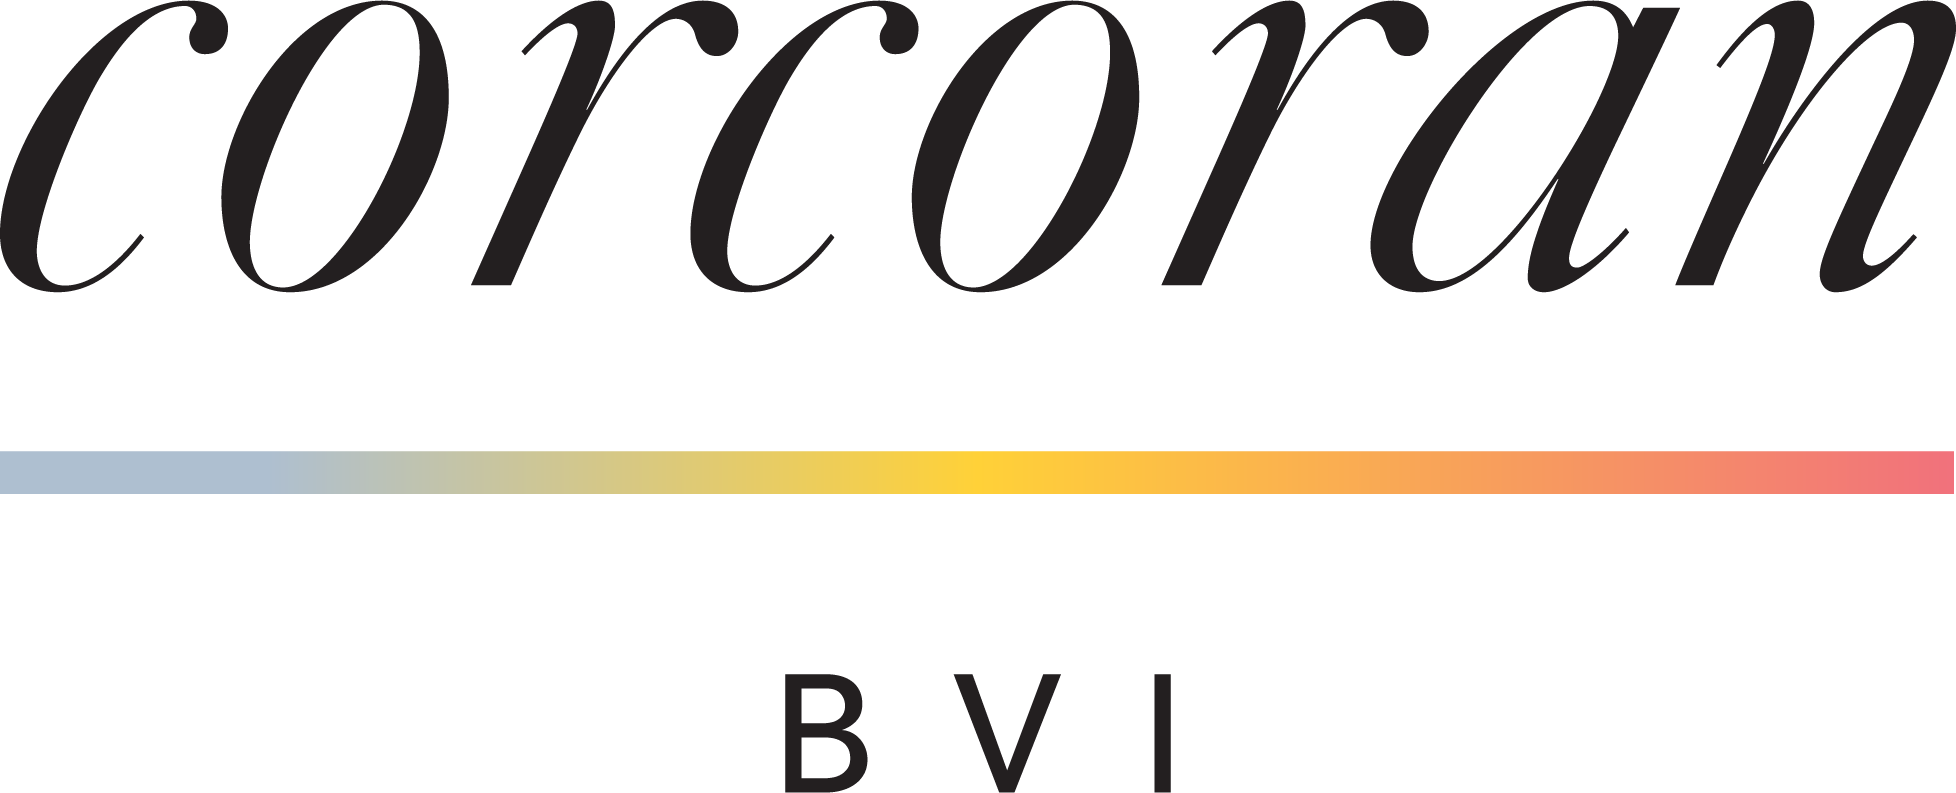 Corcoran BVI logo